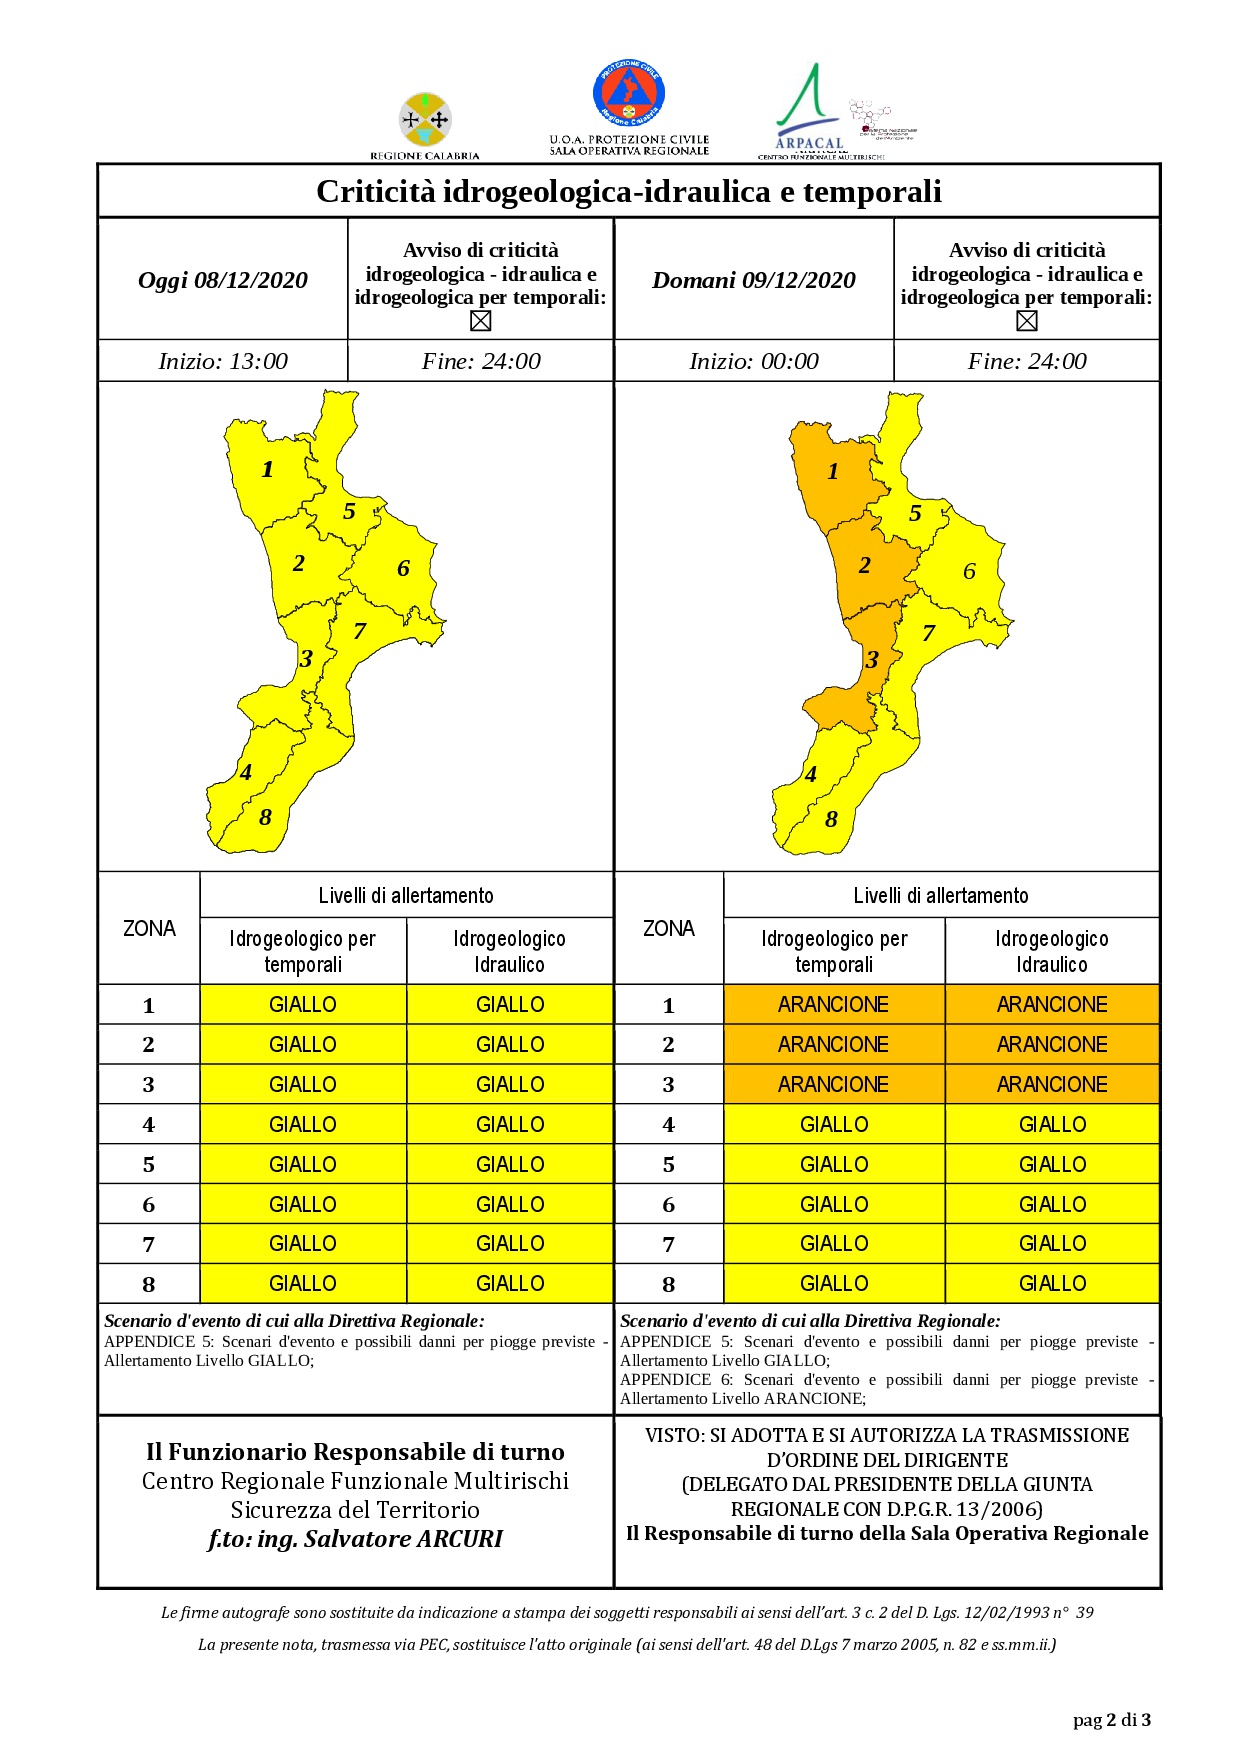 Criticità idrogeologica-idraulica e temporali in Calabria 08-12-2020